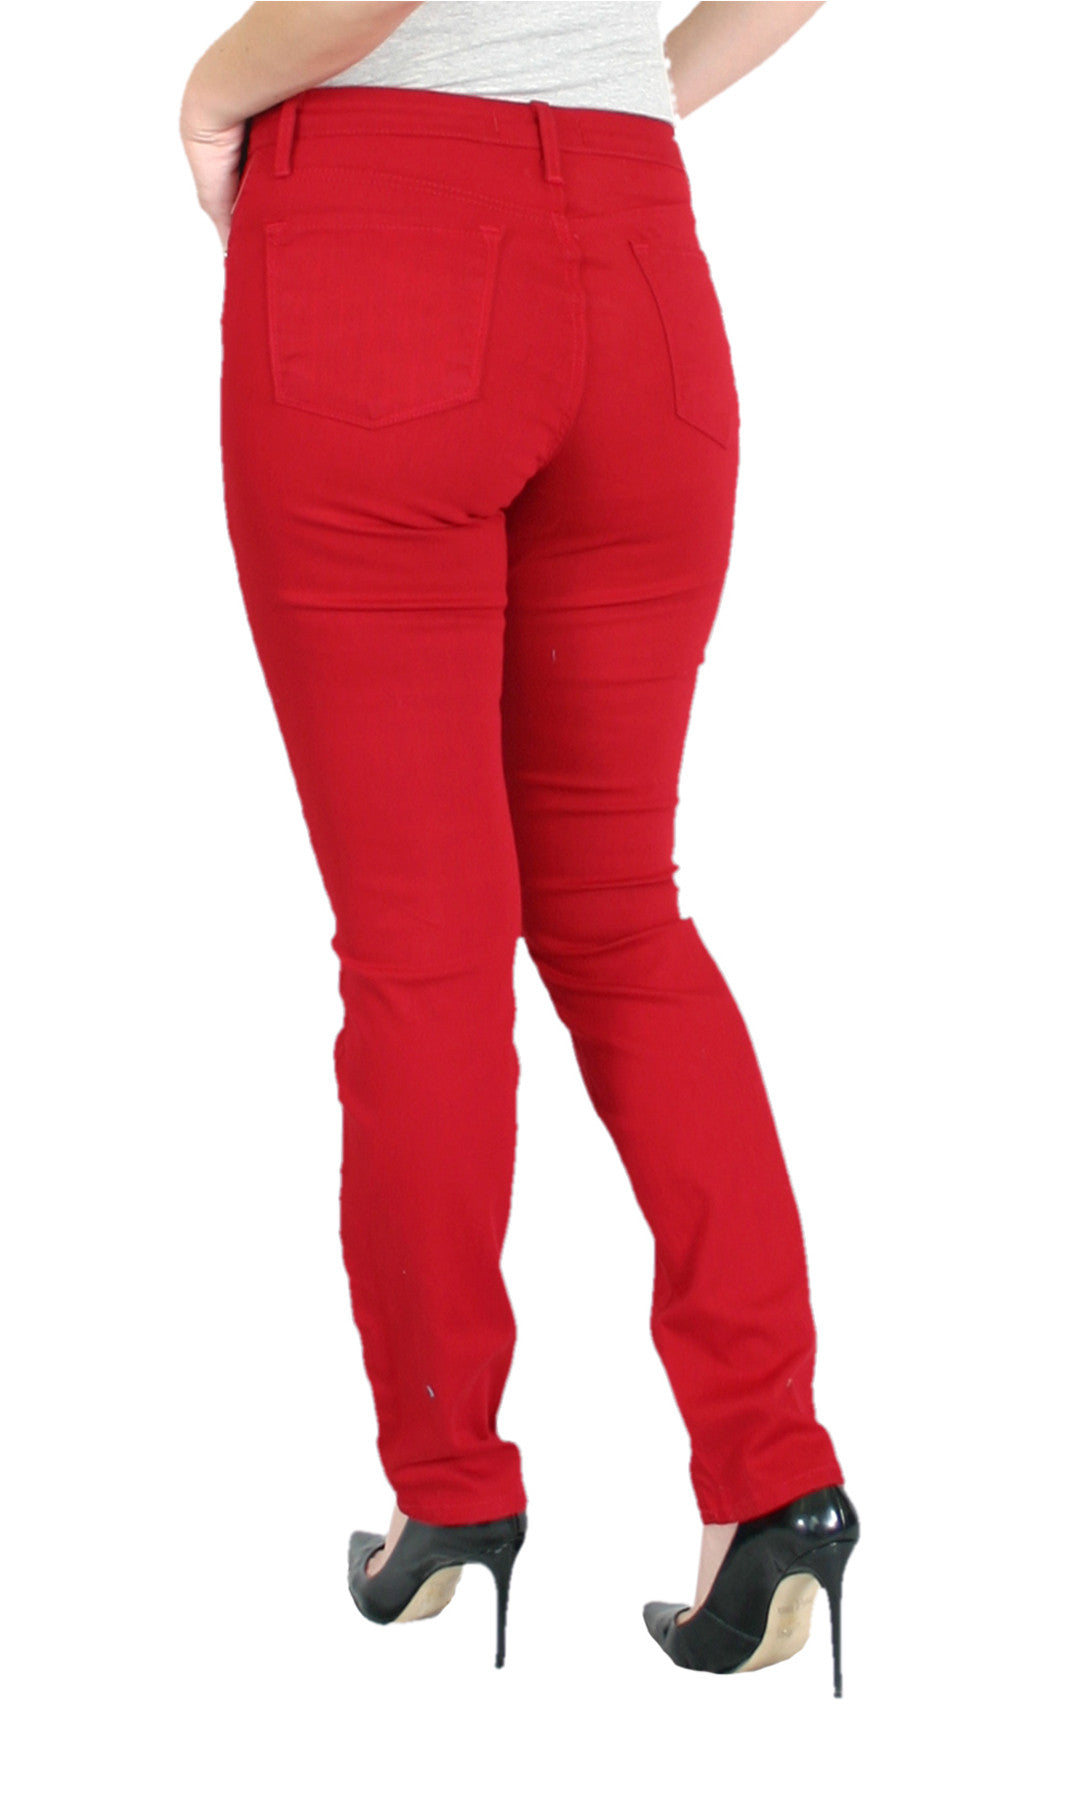 TrueSlim™ Red Jeggings for Women – TrueSlim Jeans